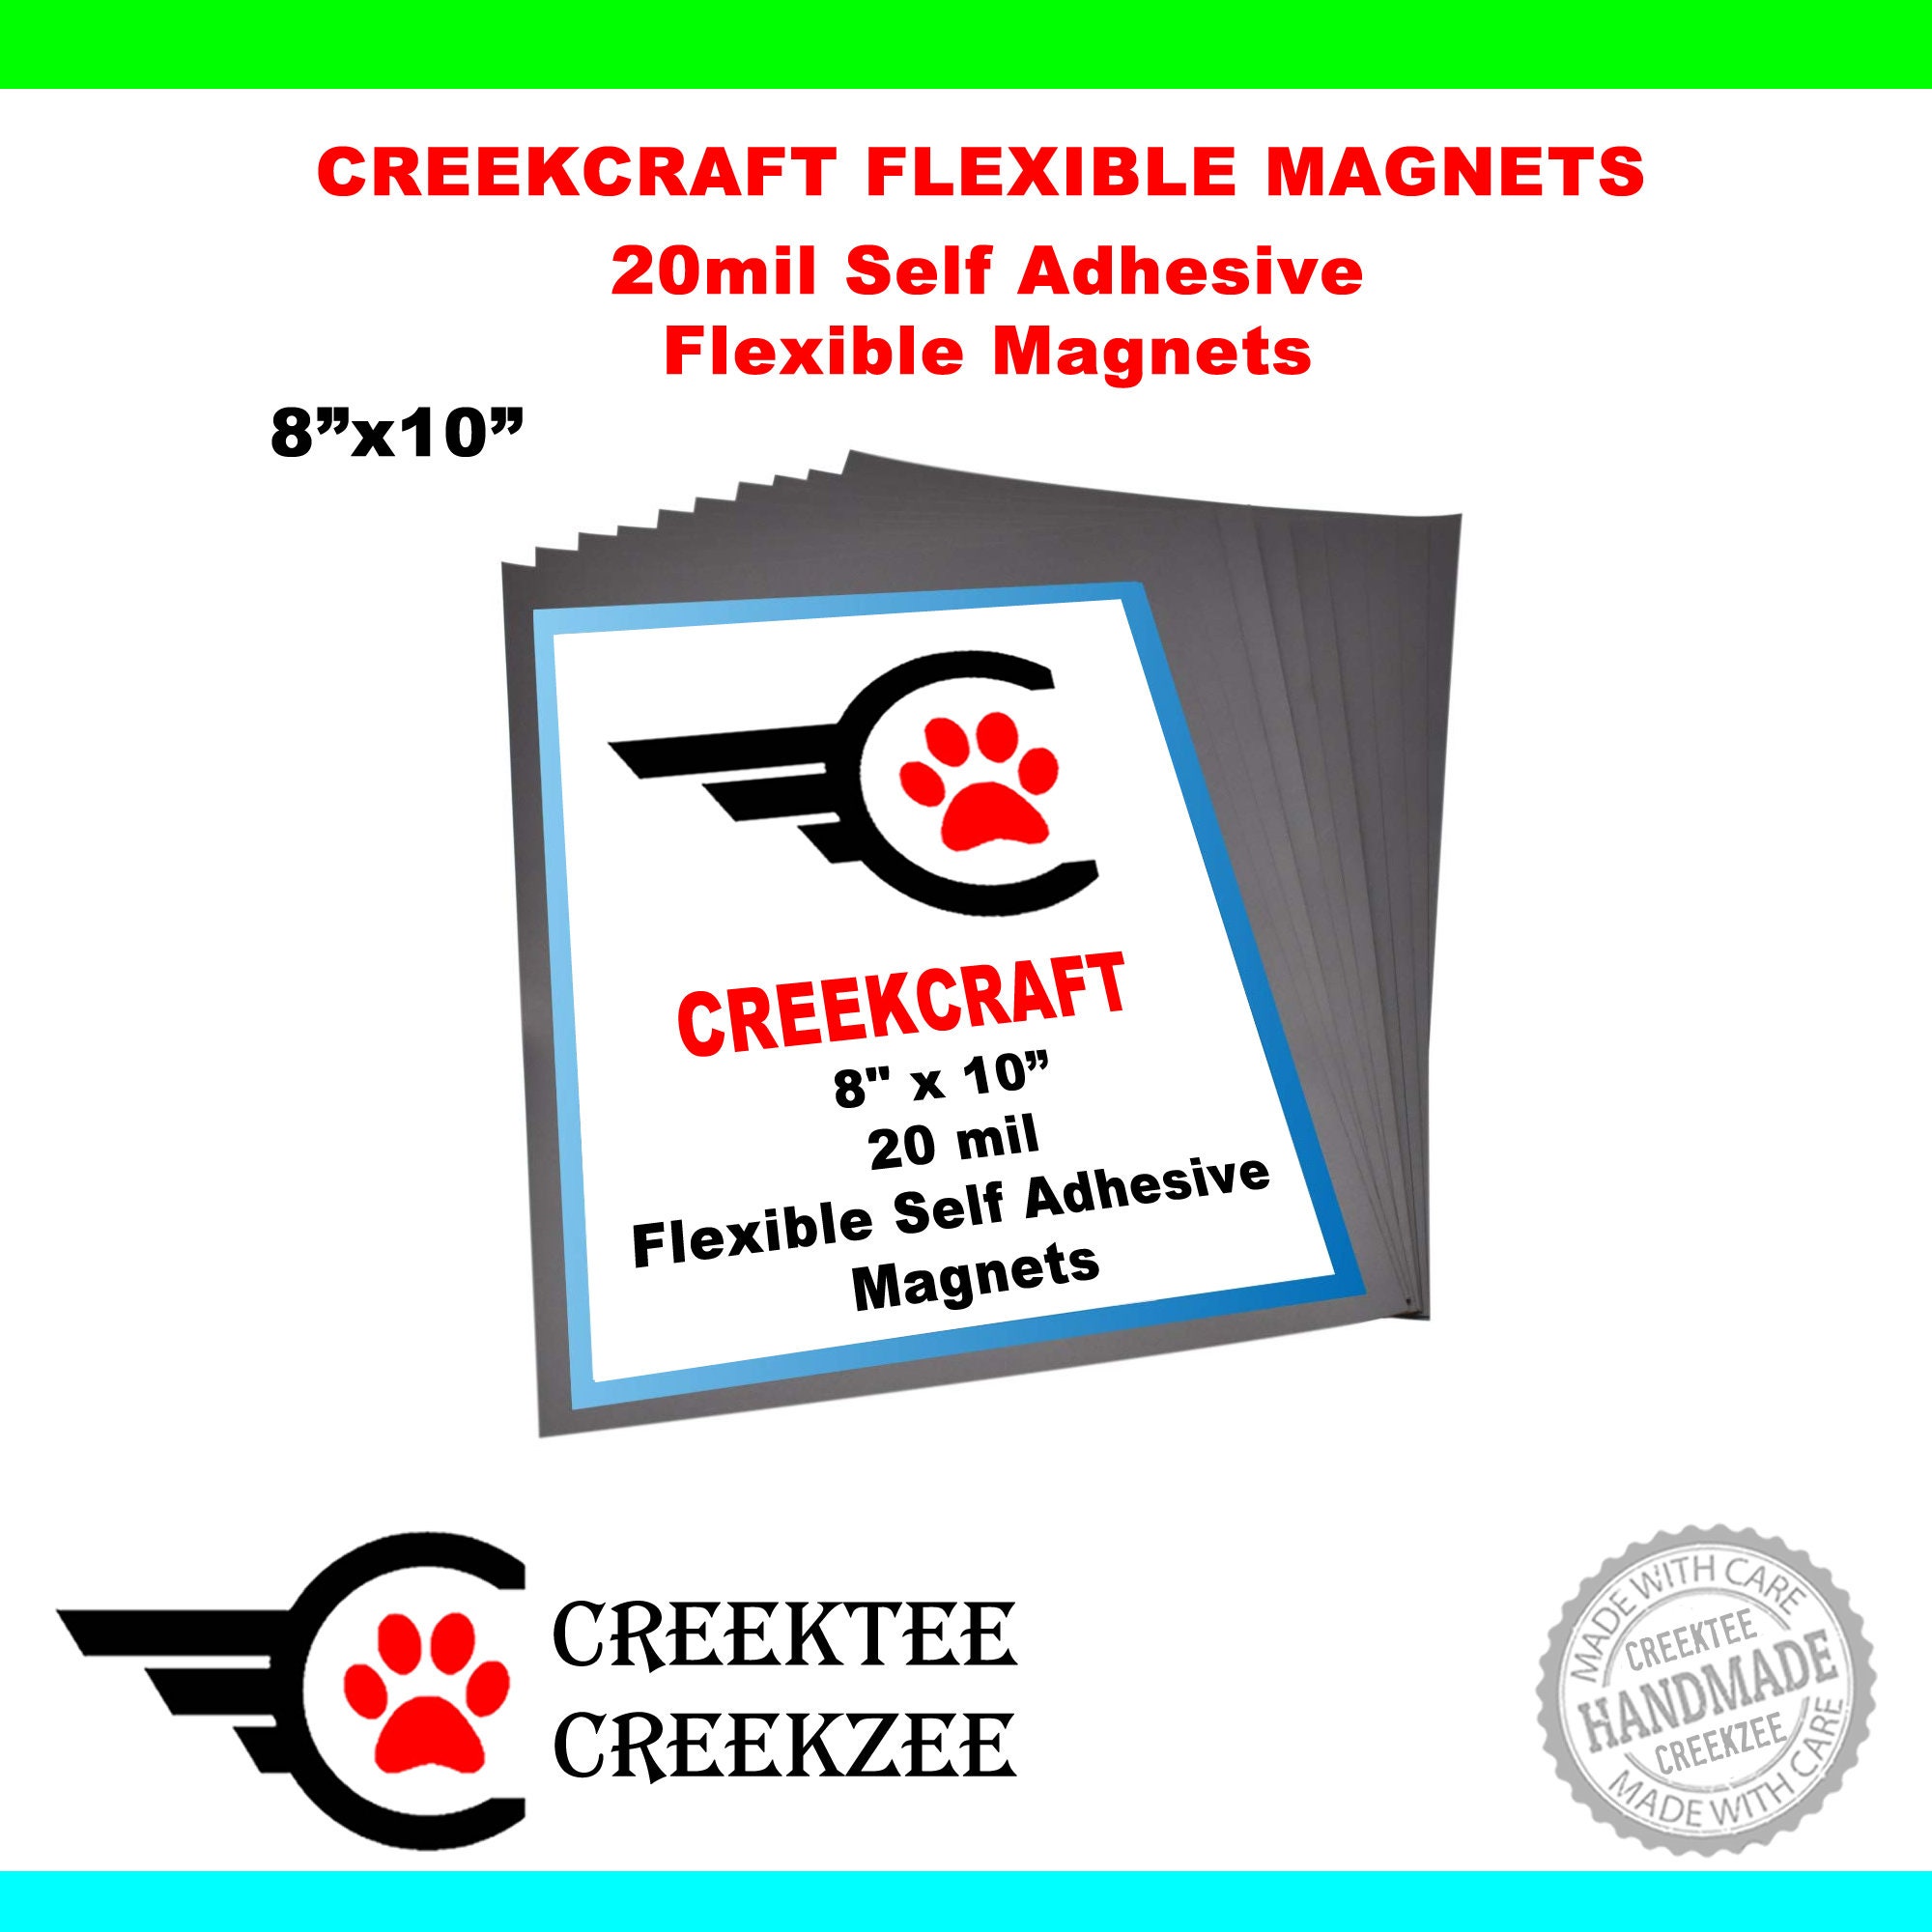 Self Adhesive Flexible Magnet - Creekcraft 20mil 8